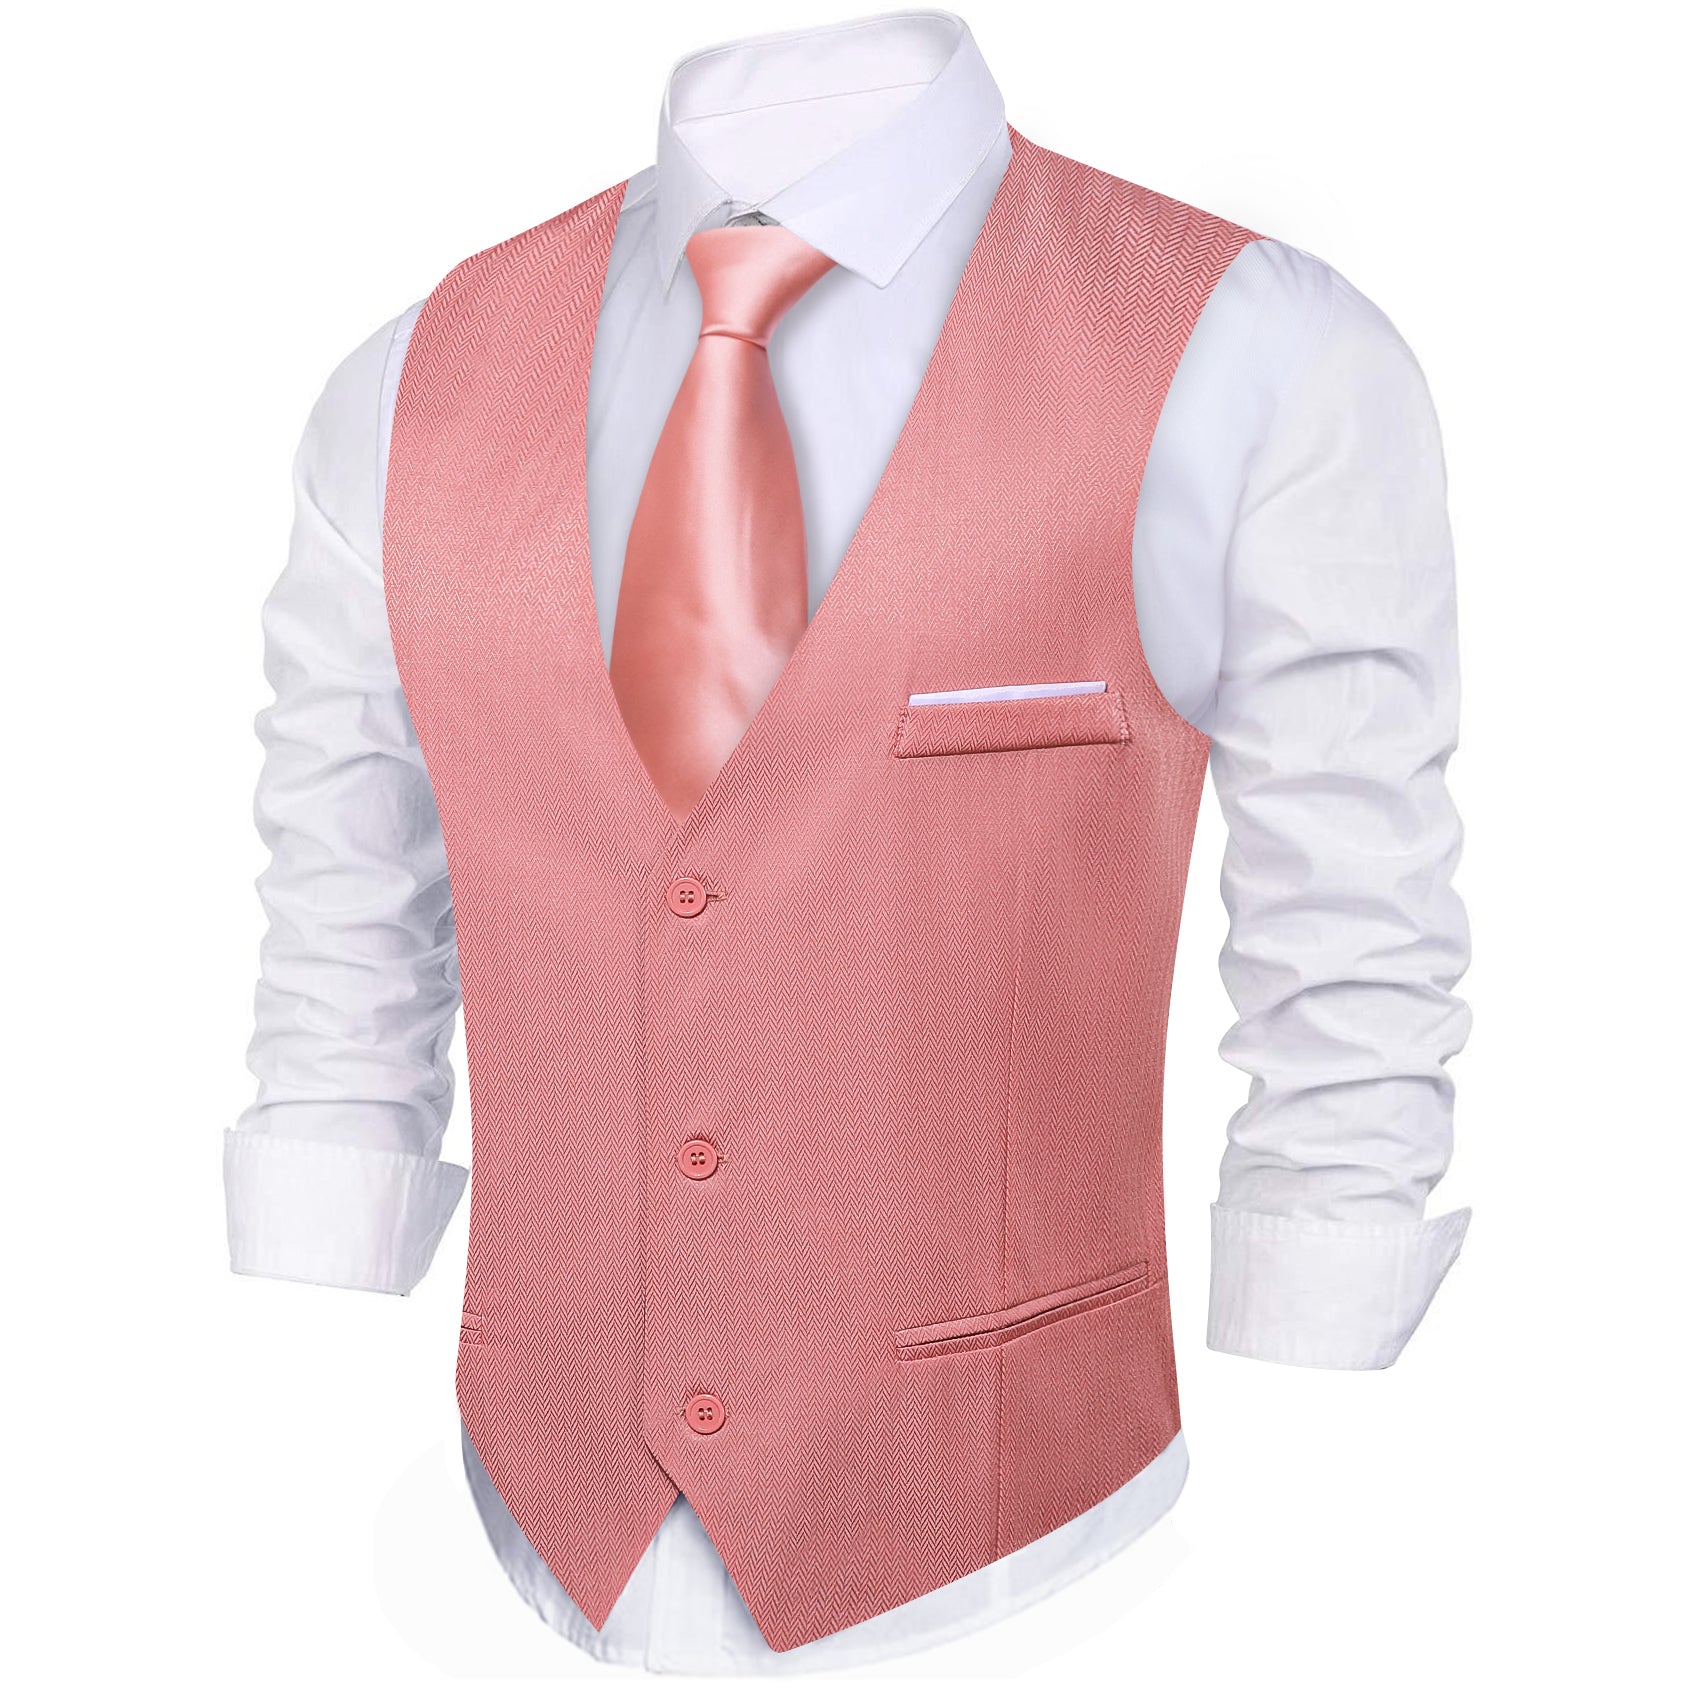 Men's Light Red Solid Vest Suit for Business